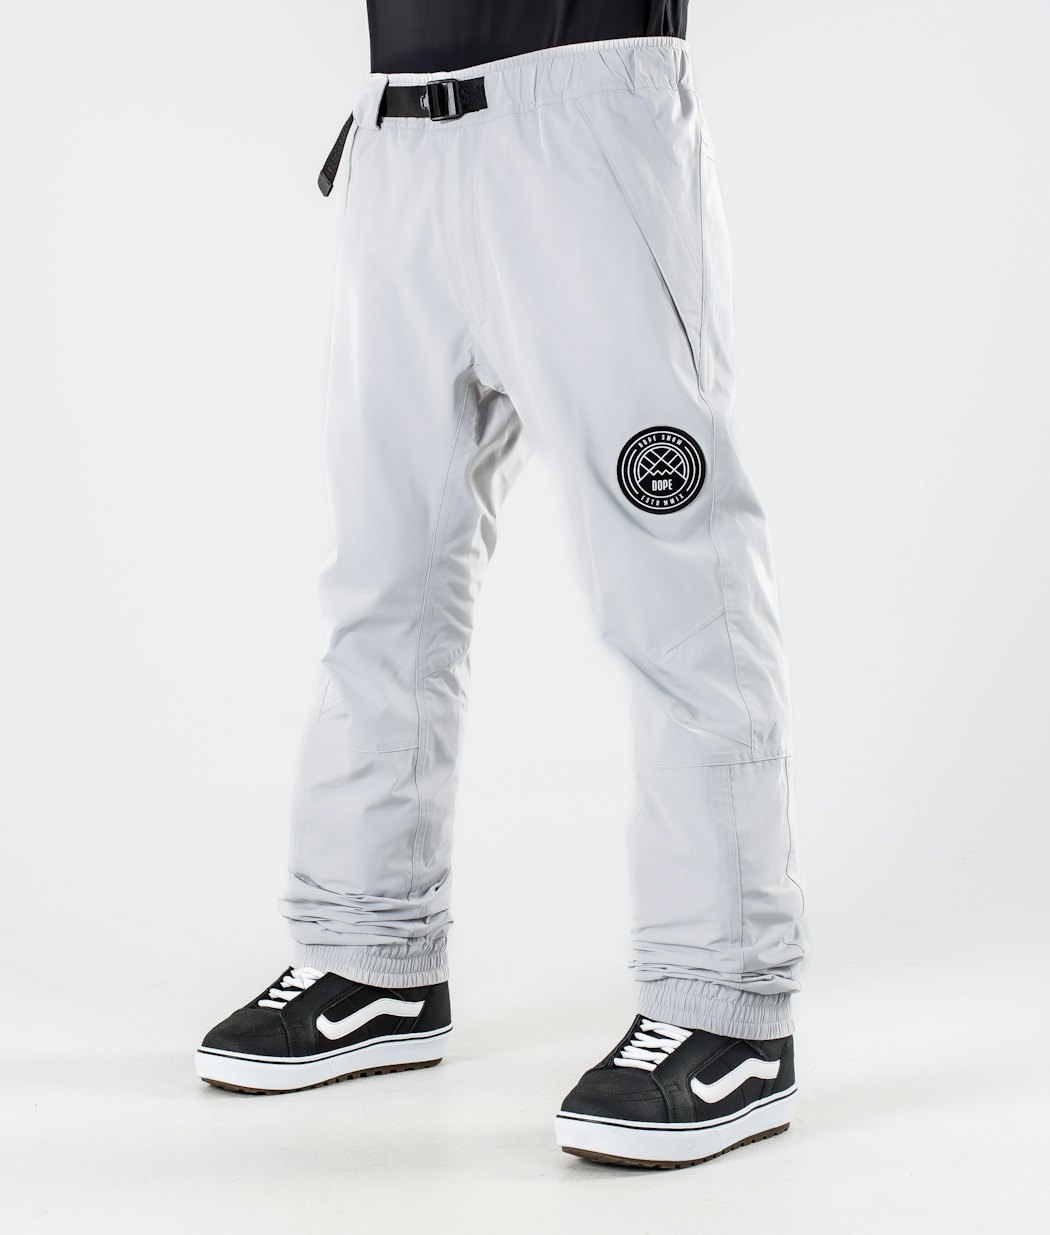 Dope Blizzard 2020 Pantalon de Snowboard Homme Light Grey